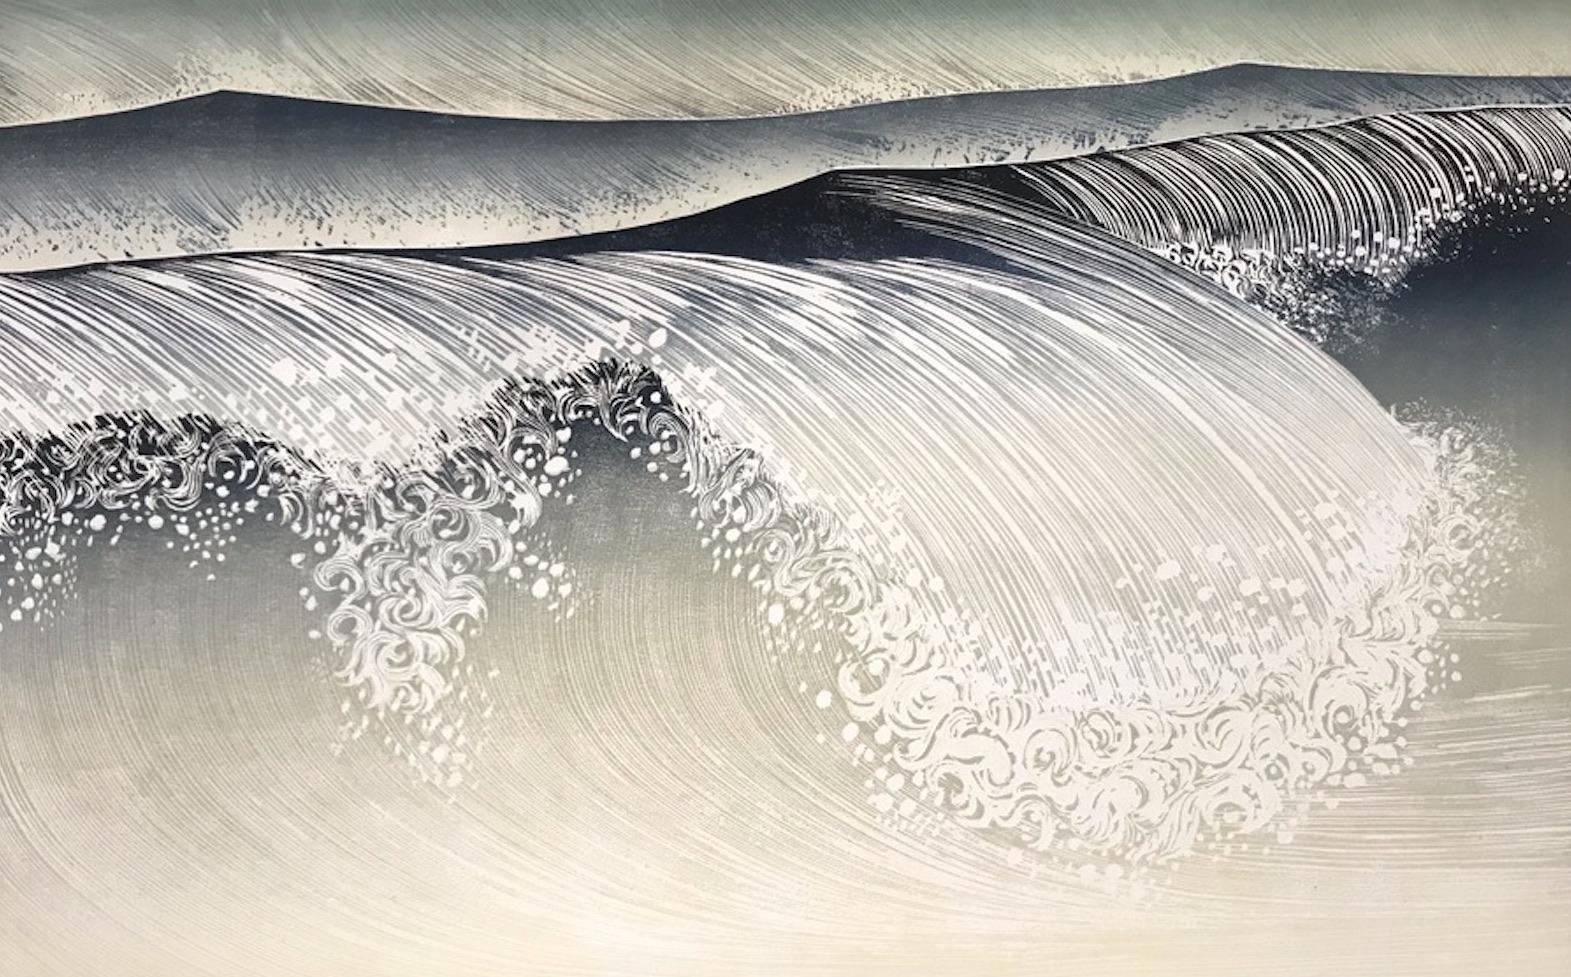 Rod Nelson  Landscape Print - Shorebreak, Japanese style woodcut print, contemporary handmade seascape print,